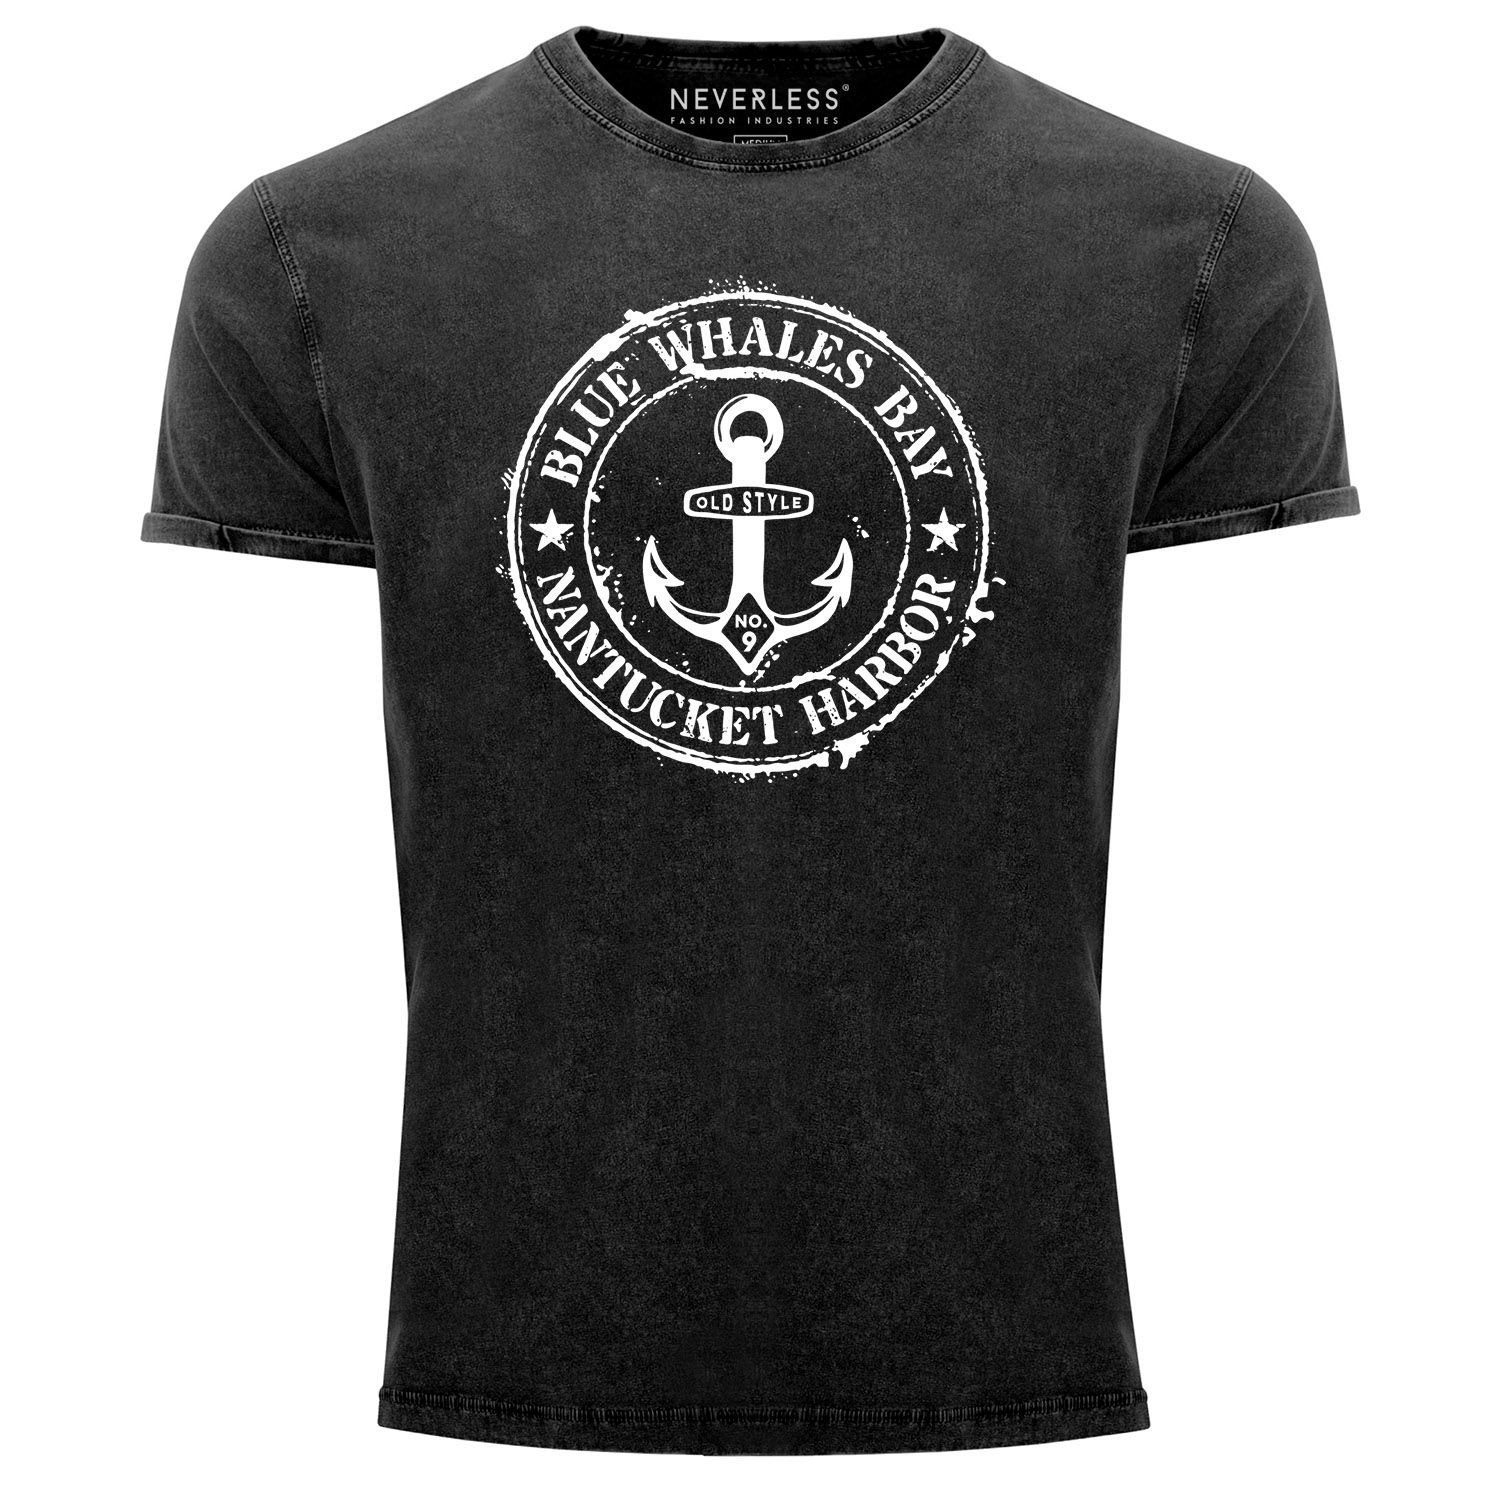 Herren Anker Anchor Vintage mit Neverless® Neverless schwarz Badge Shirt Printshirt Print-Shirt Motiv maritim Vintage Slim Retro Fit Look Print Used